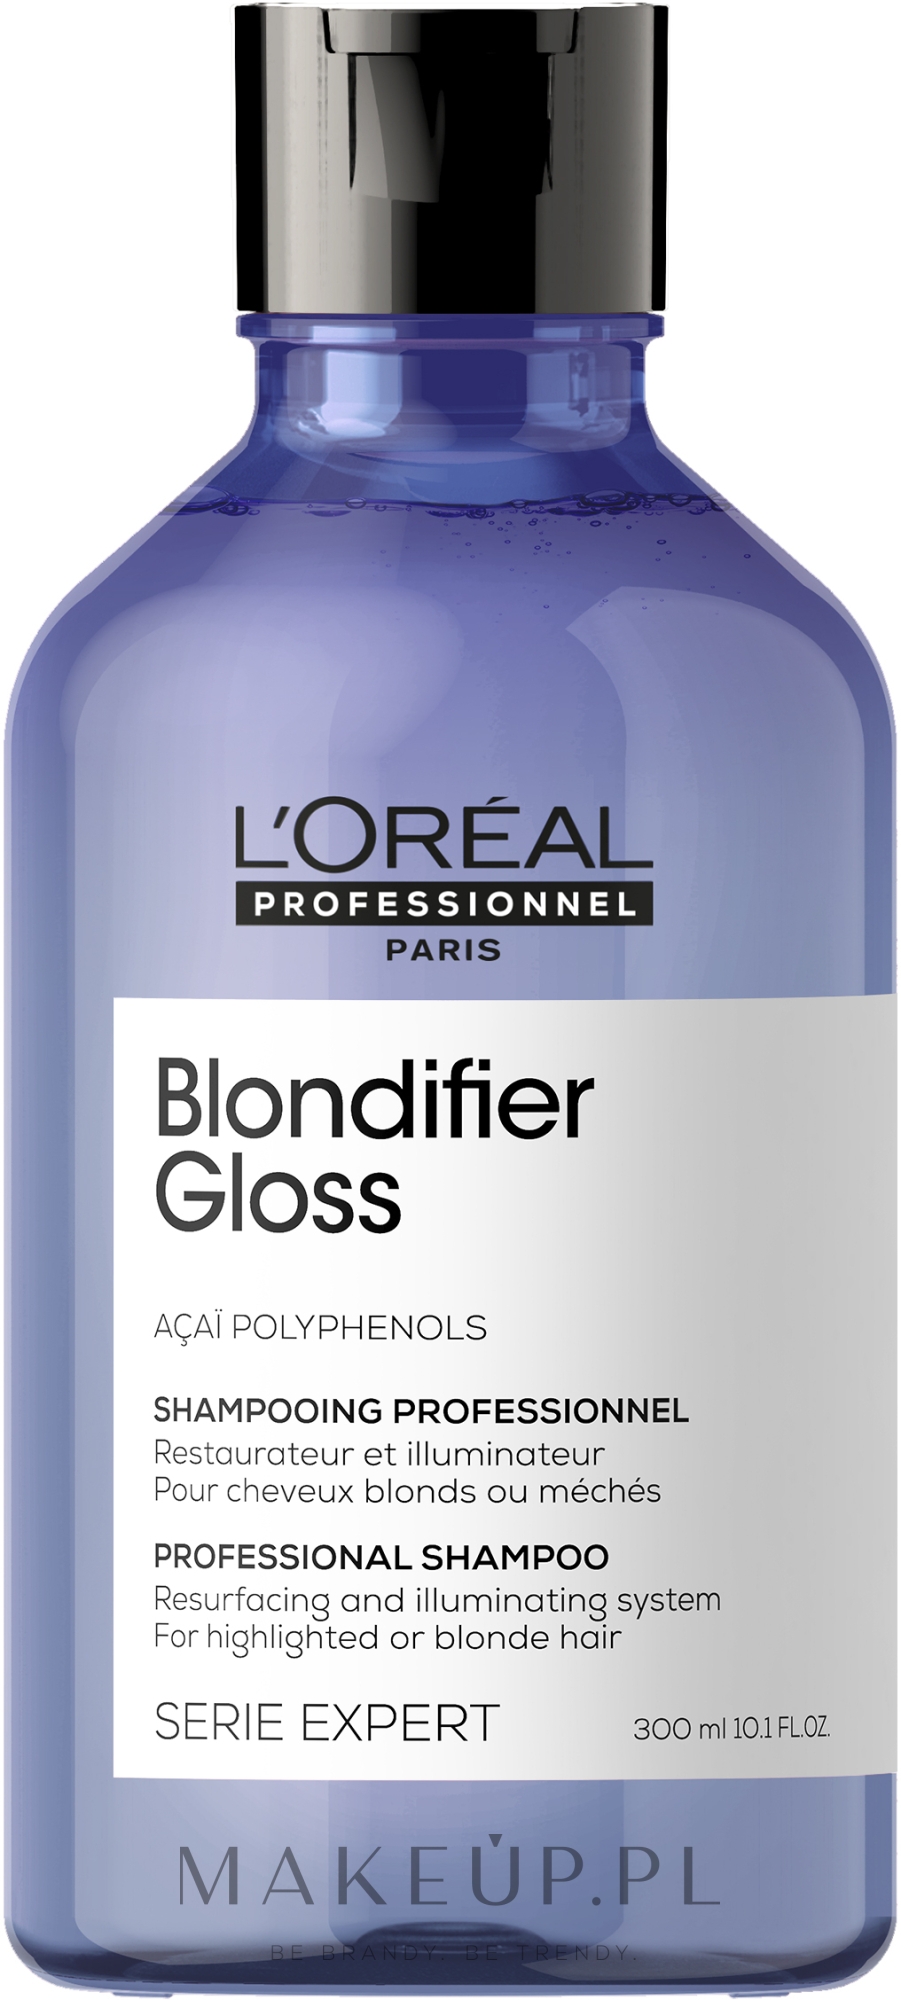 szampon blondifer gloss loreal